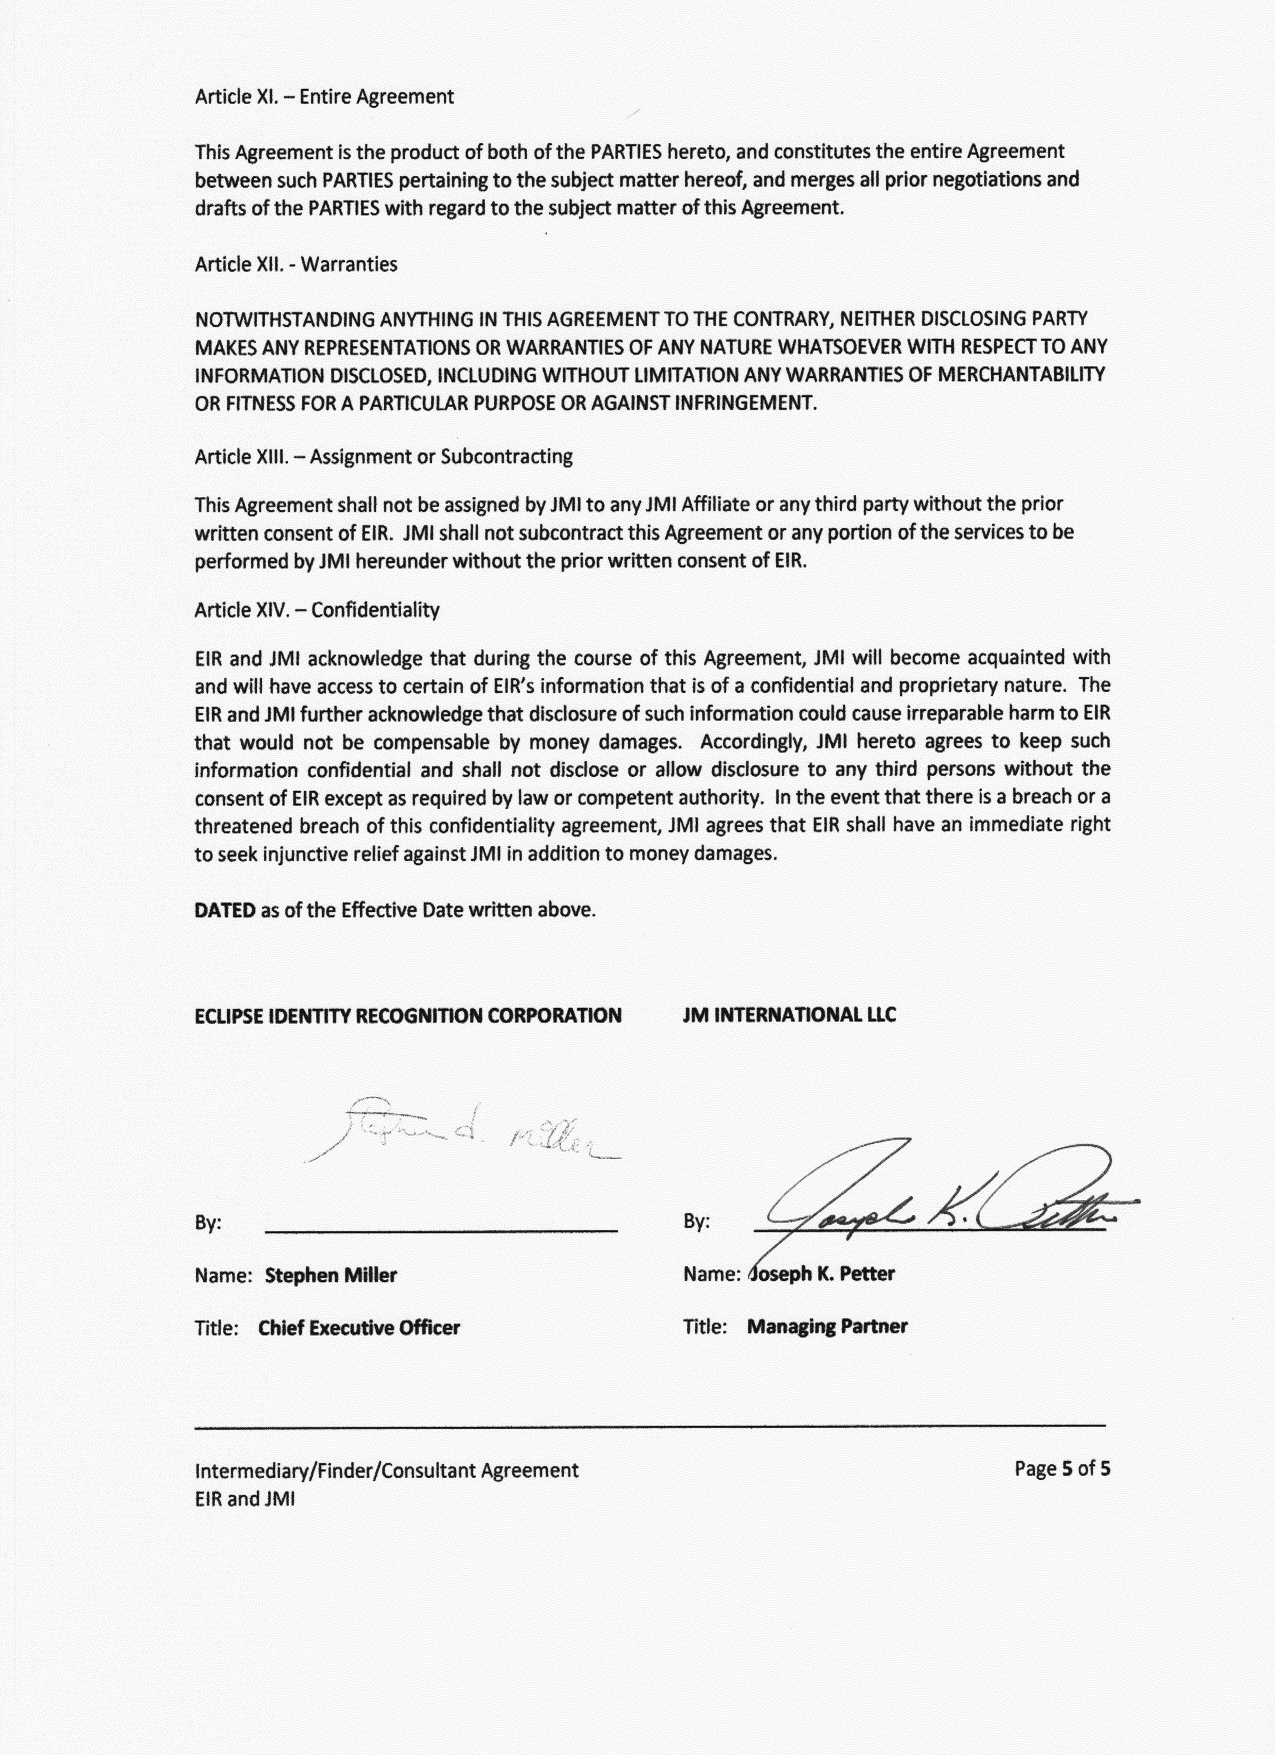 Referral Fee Agreement Form Intermediaryfinderconsultant Agreement